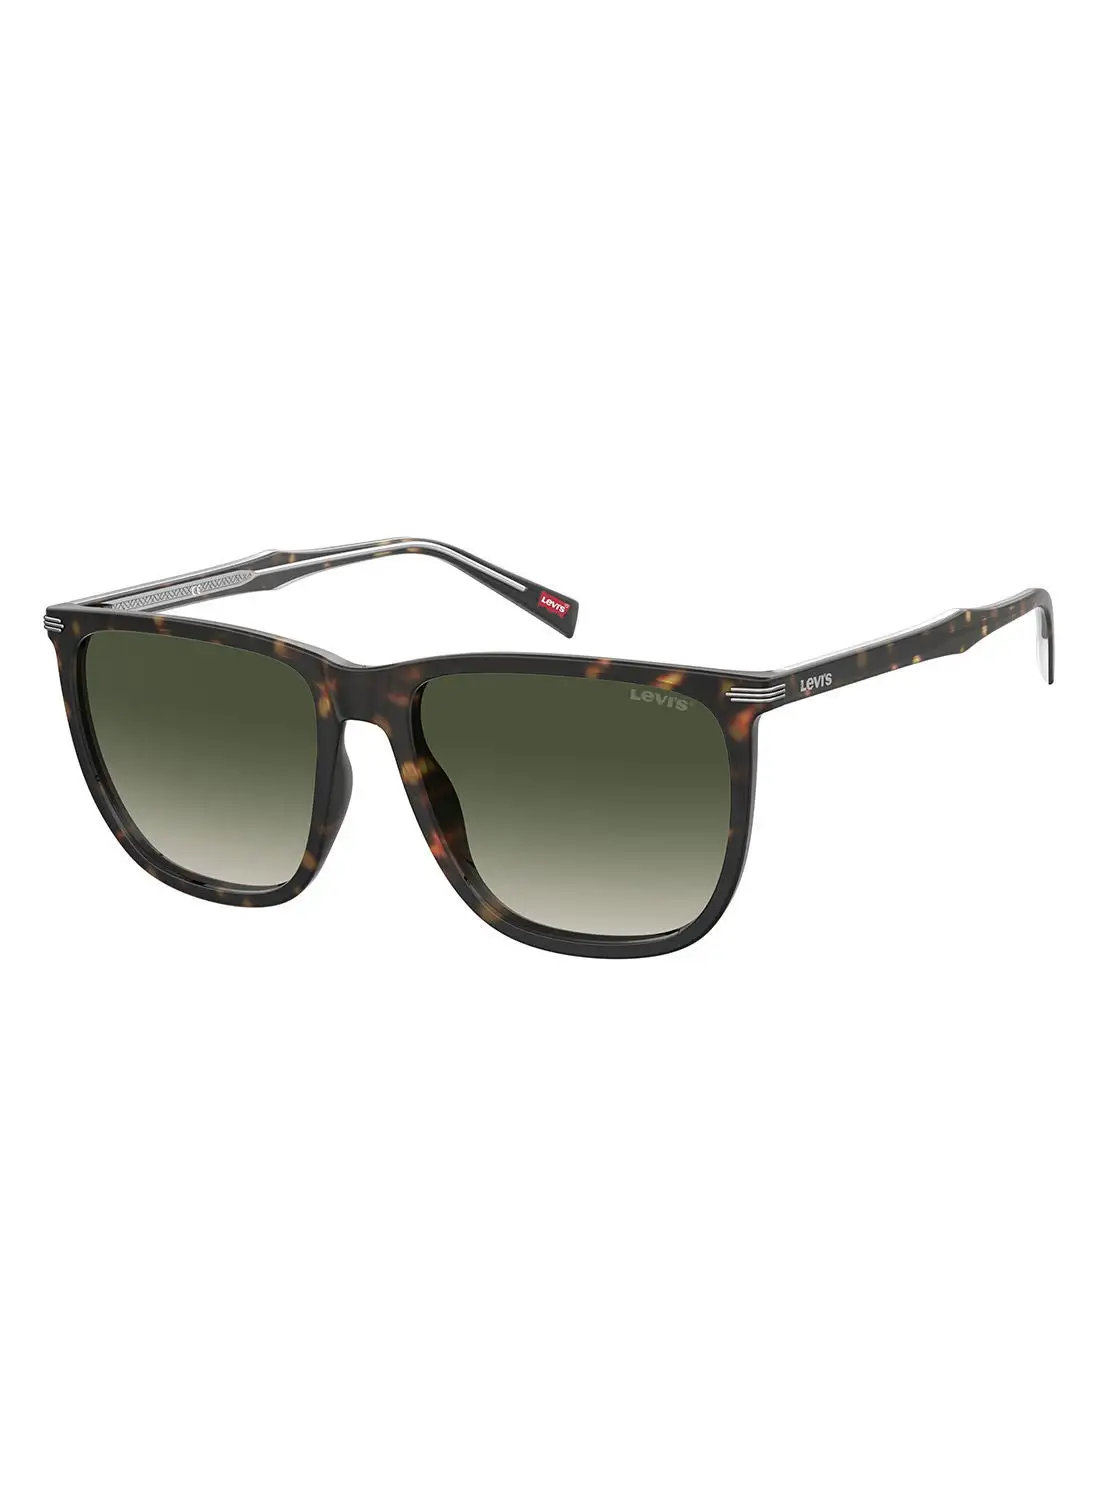 Levi's Men's UV Protection Semi-Oval Sunglasses - Lv 5020/S Hvn 57 - Lens Size: 57 Mm